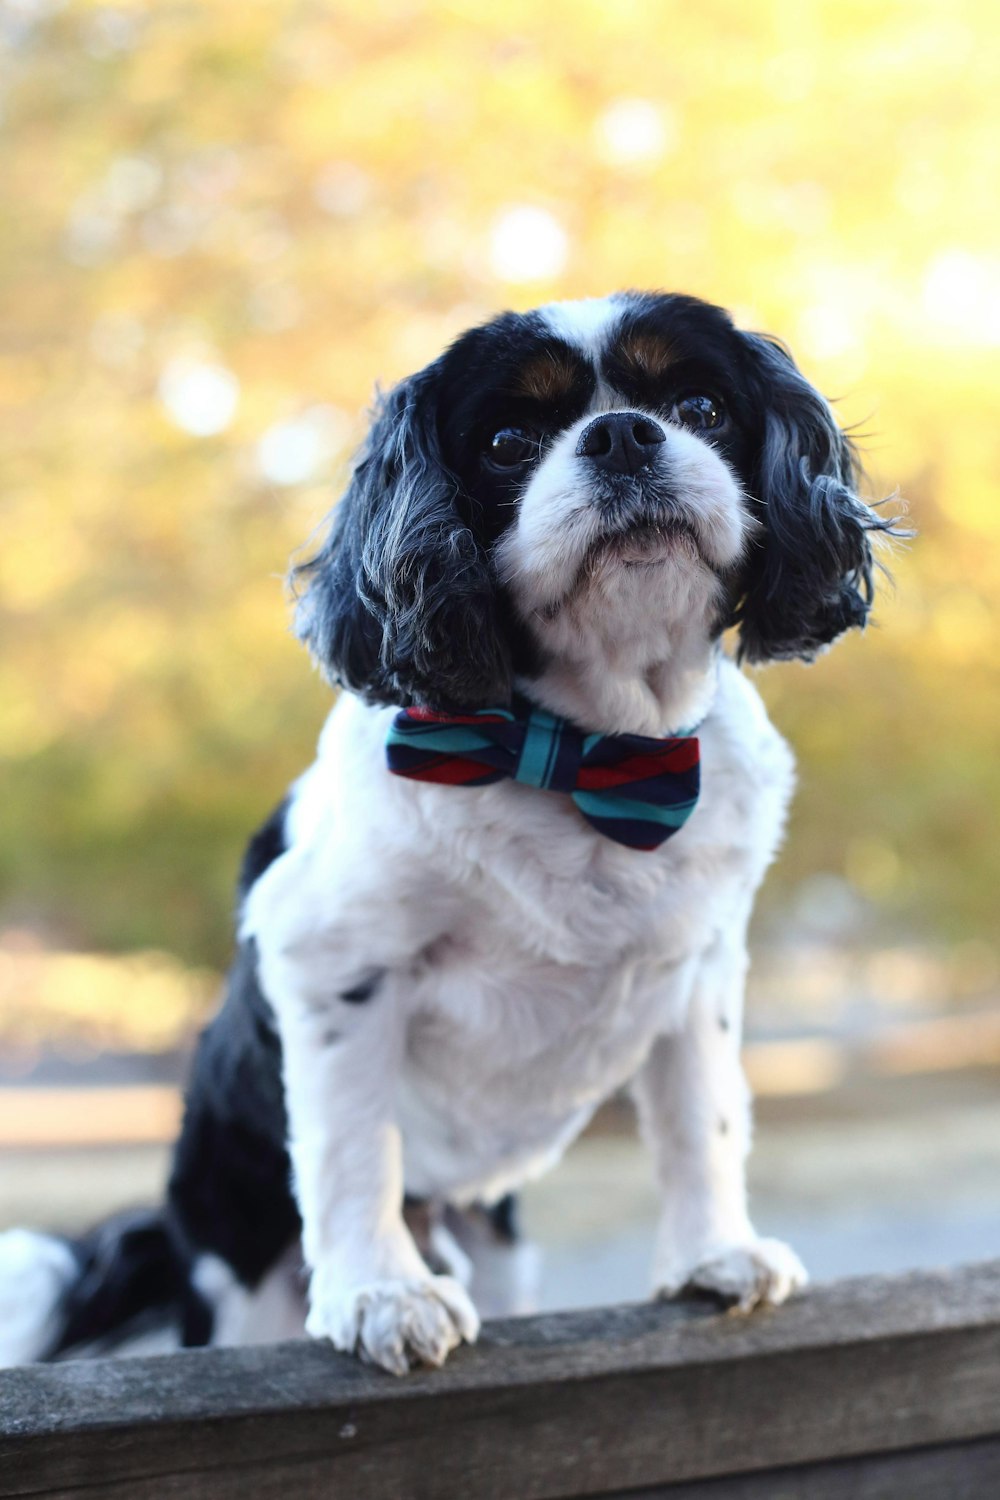 white and black short coated dog wears necktie